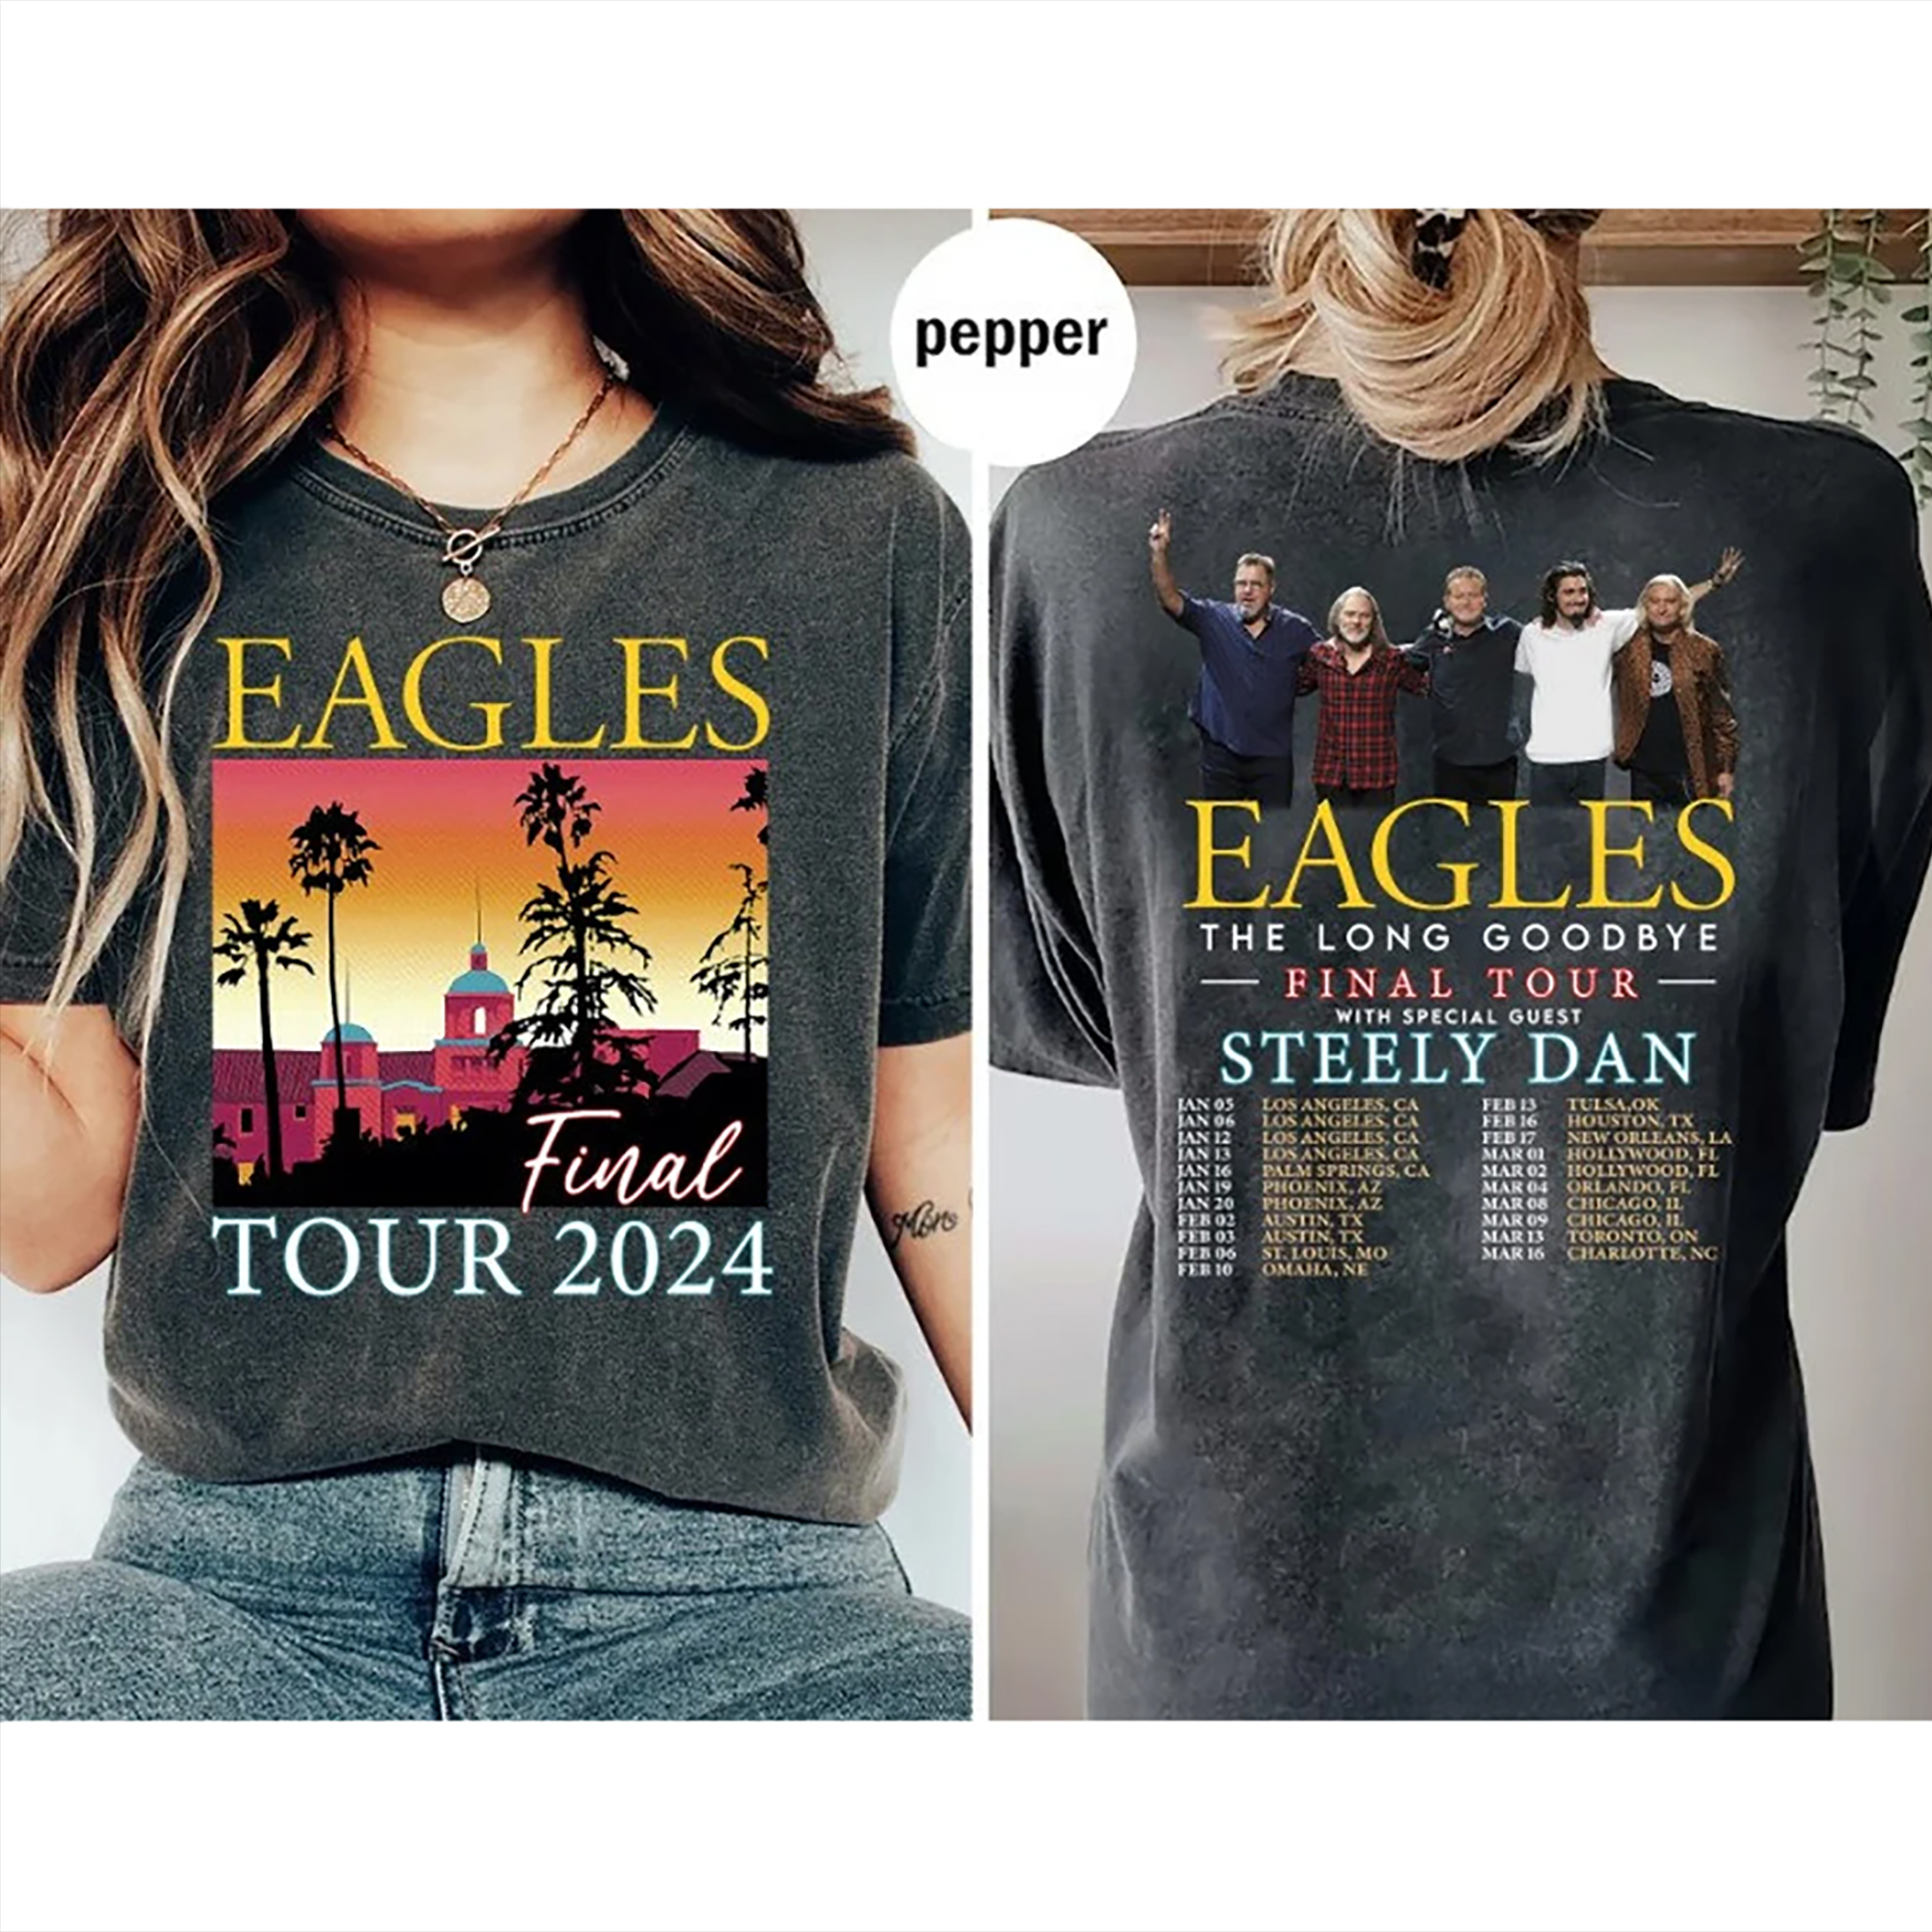 The Eagles 2024 Tour Shirt, Eagles Long Goodbye Tour 2024 Shirt, The ...